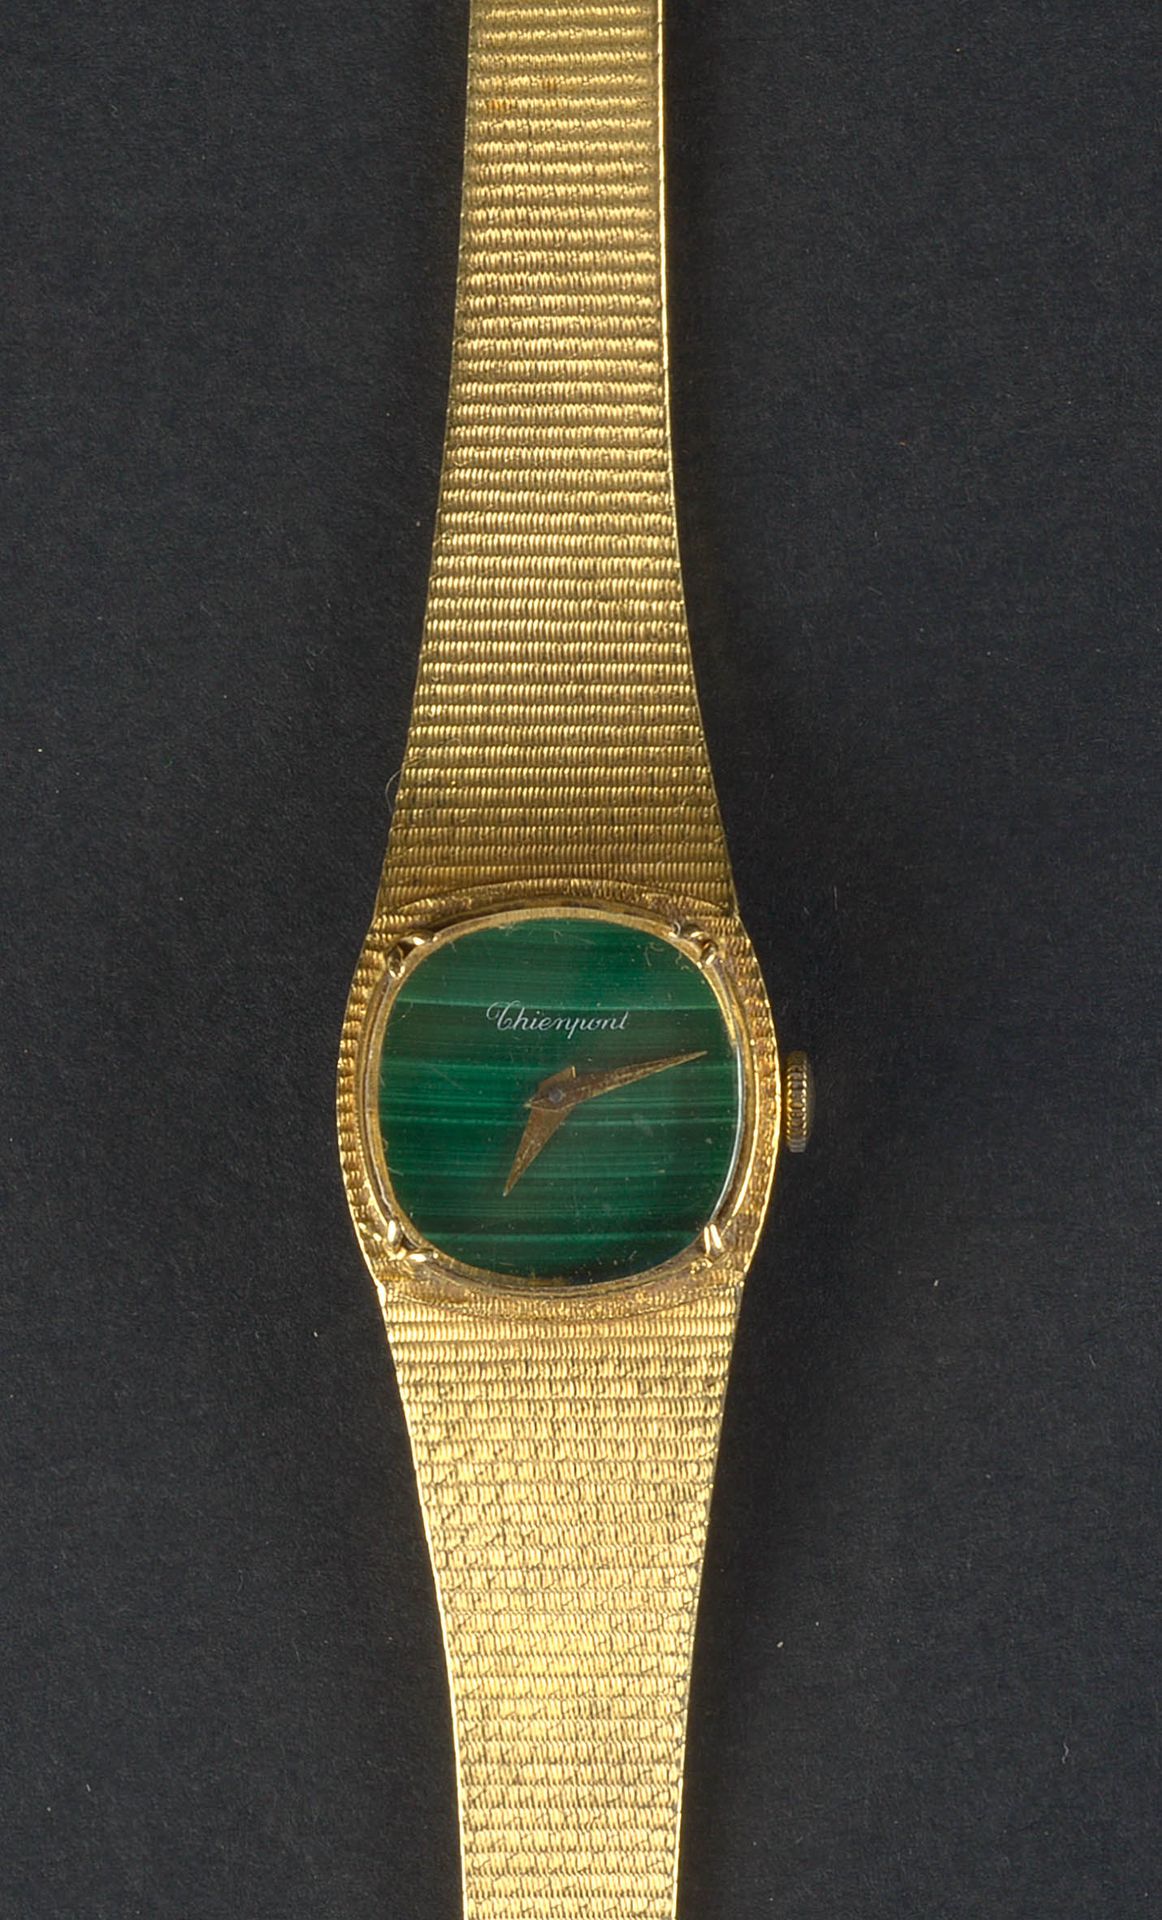 Null Ladies' watch in 18K yellow gold, Chienpont brand. Malachite dial. Mechanic&hellip;